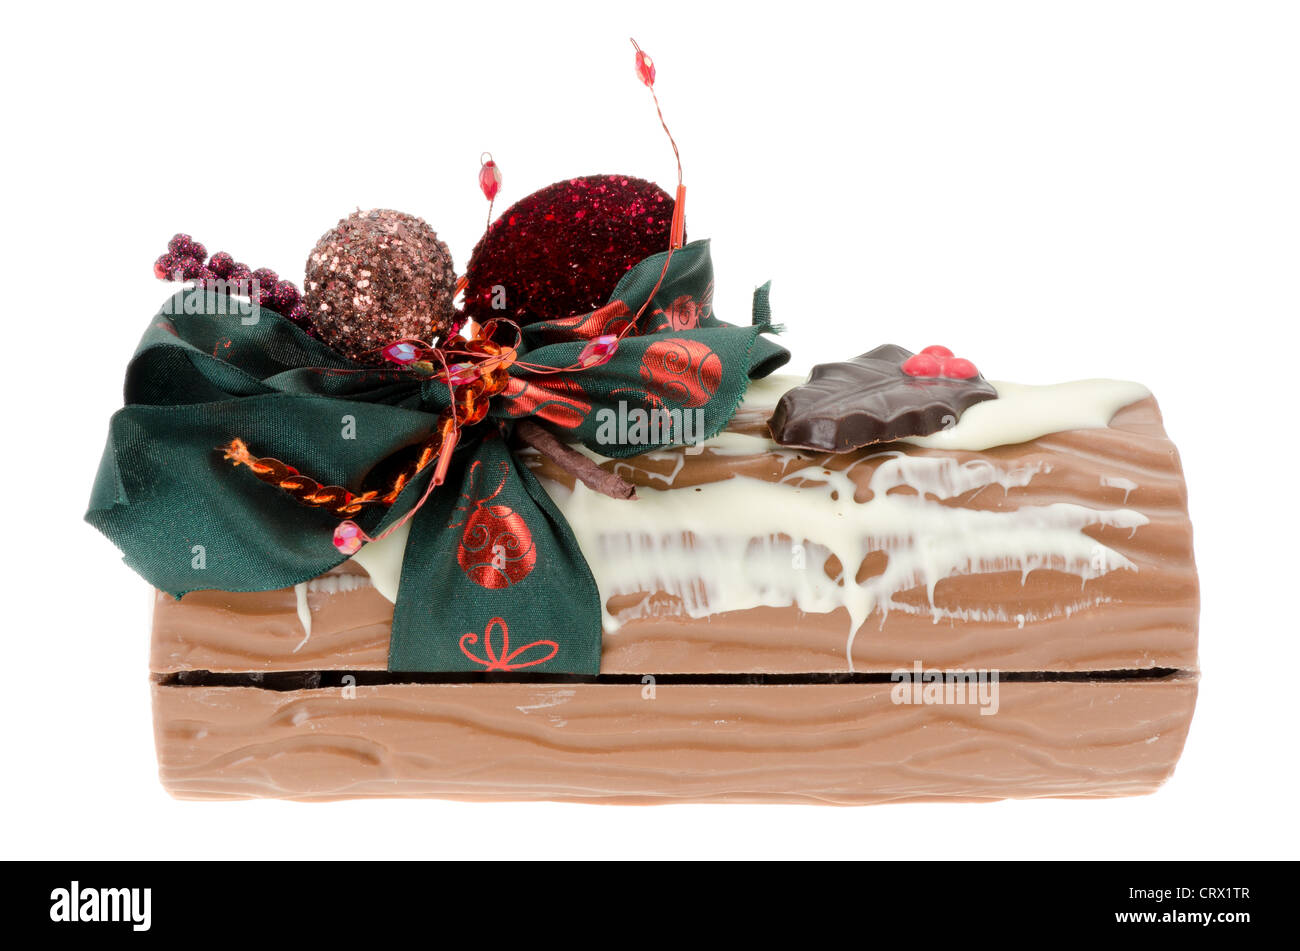 Belgian chocolate Yule log - studio shot with a white background Stock Photo